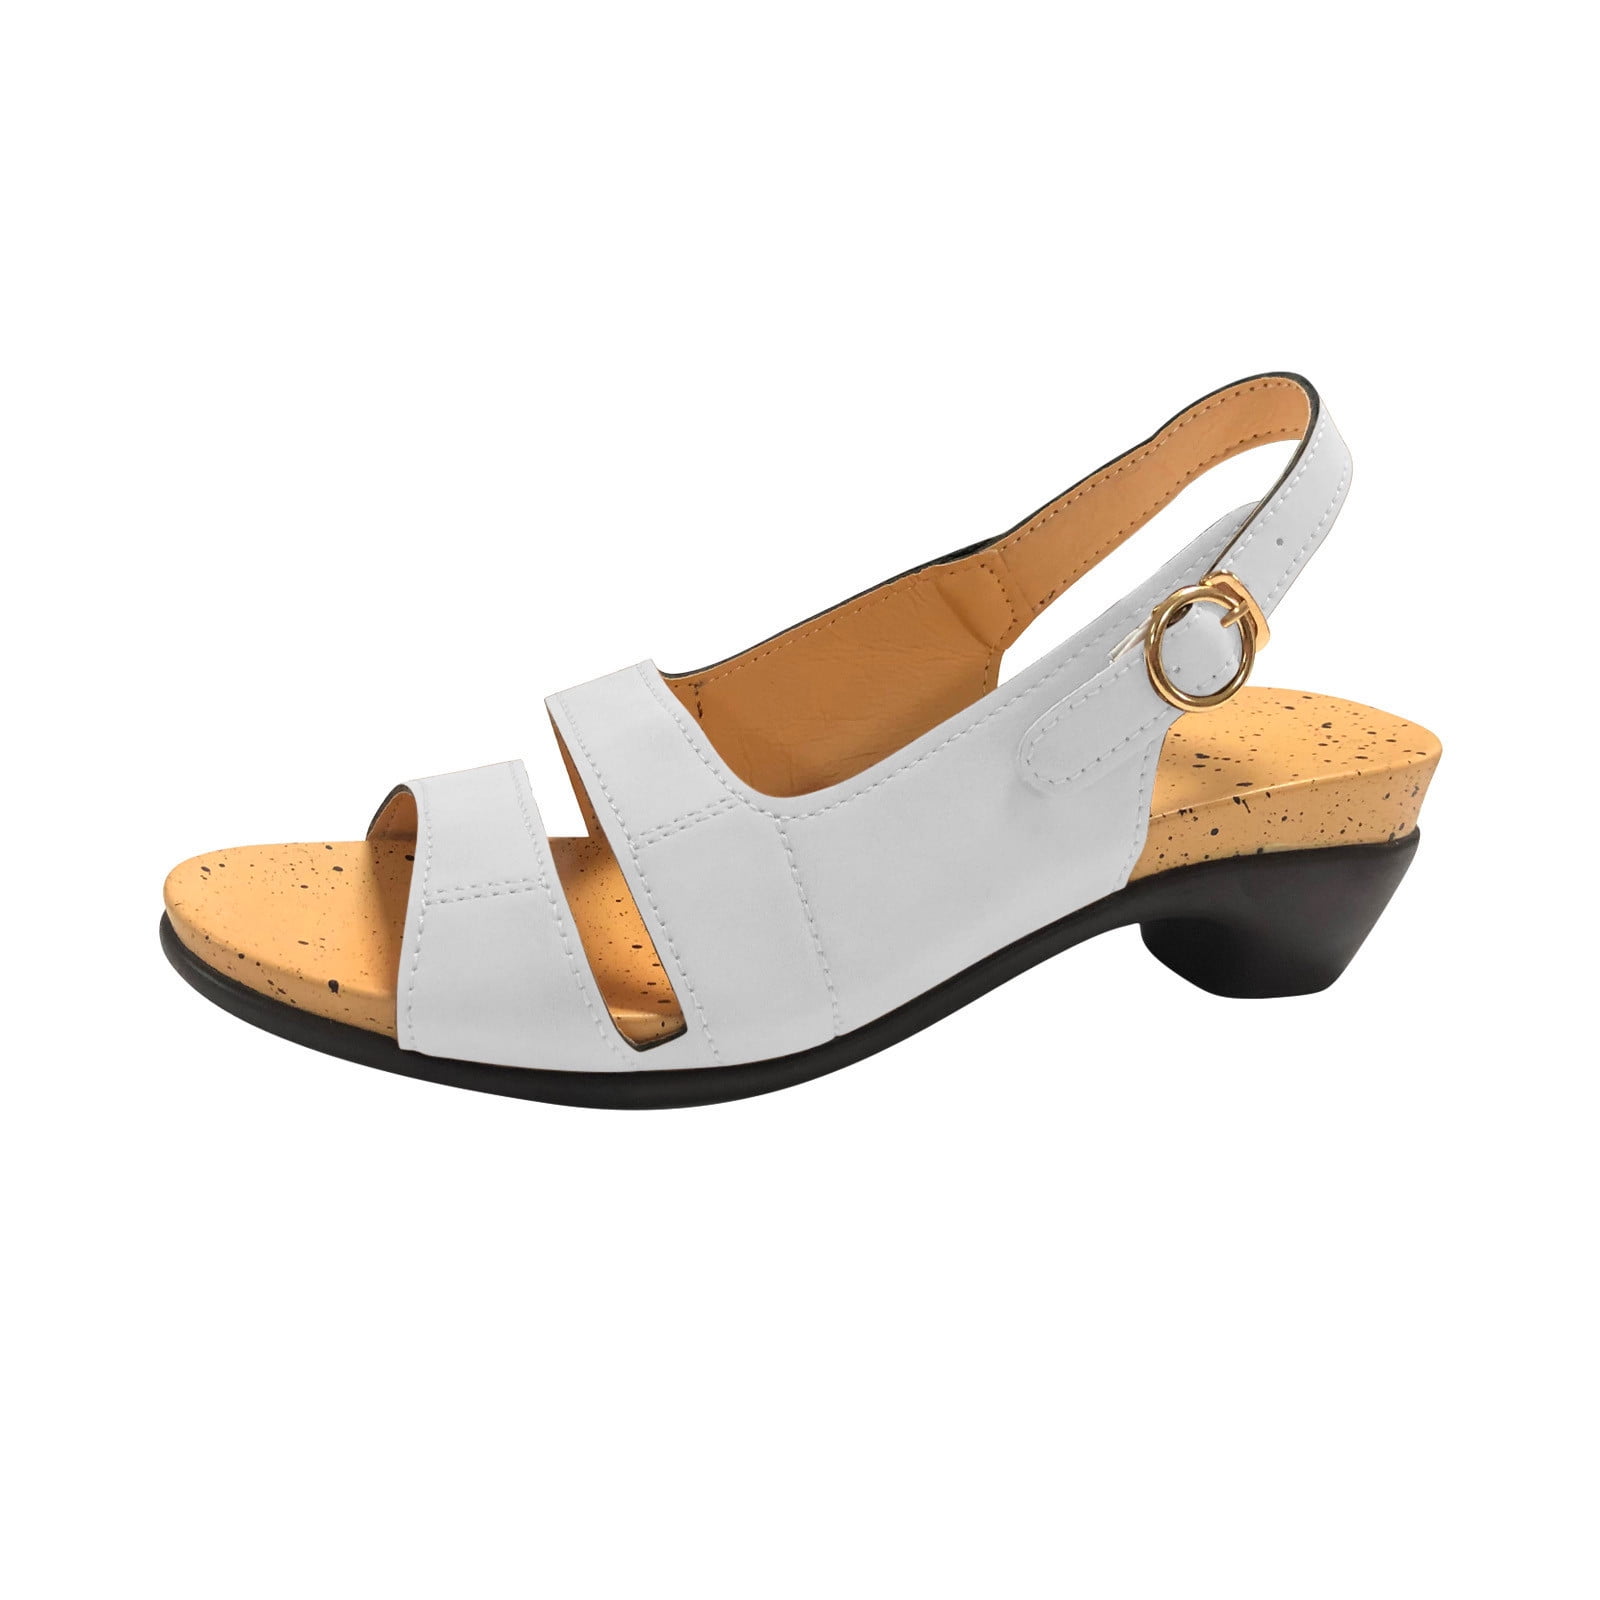 Hvyesh Women's Open Toe Chunky Heel Sandals Low Wedge Sandal Shoes ...